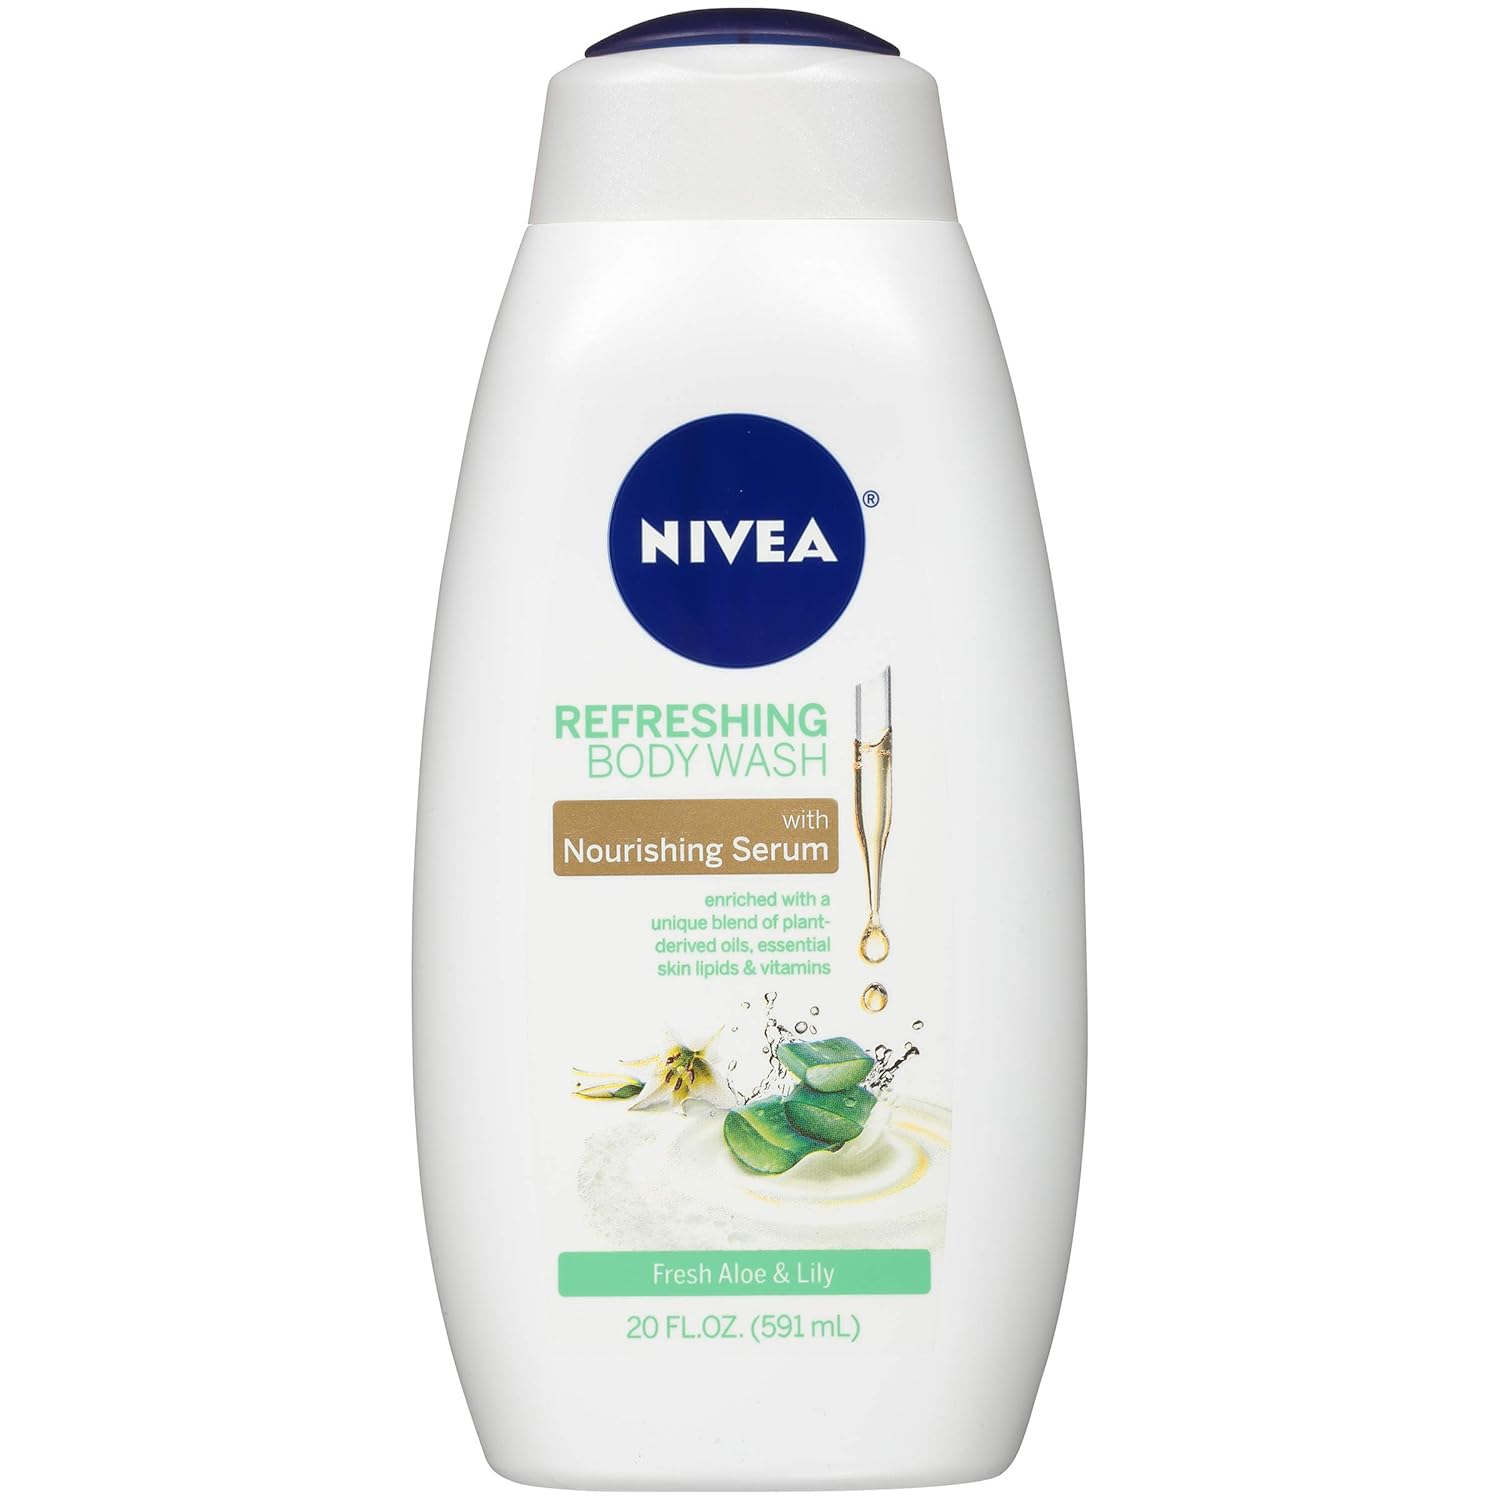 NIVEA Fresh Aloe and Lily Refreshing Body Wash with Nourishing Serum, 20 Fl Oz Bottle